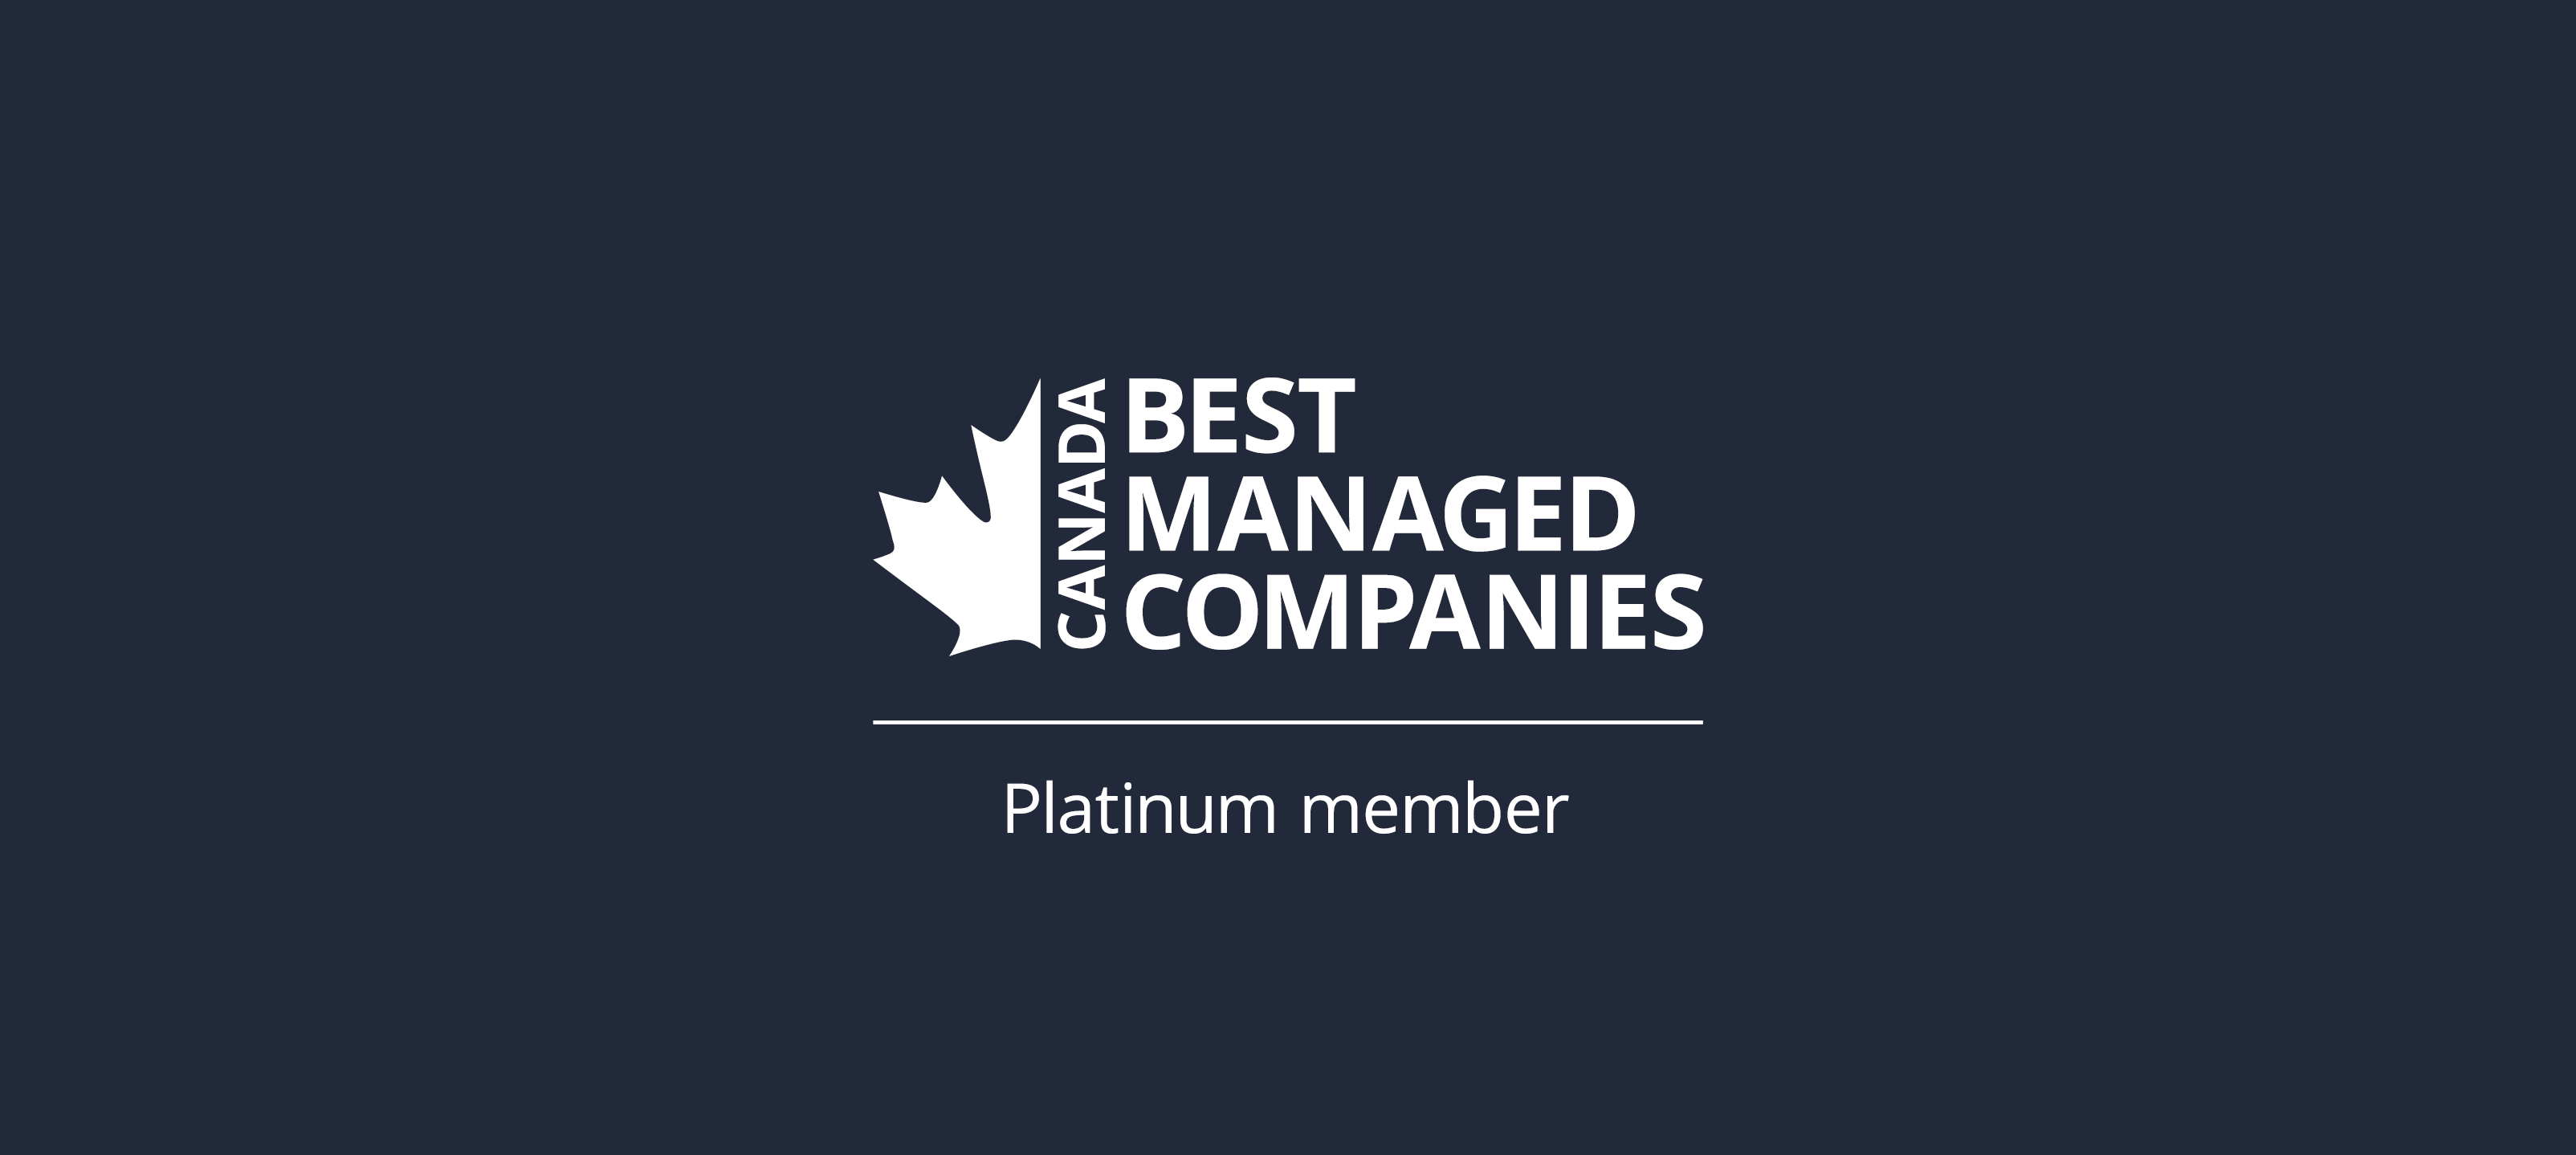 Canada Best Managed Companies Platimum Member Seal